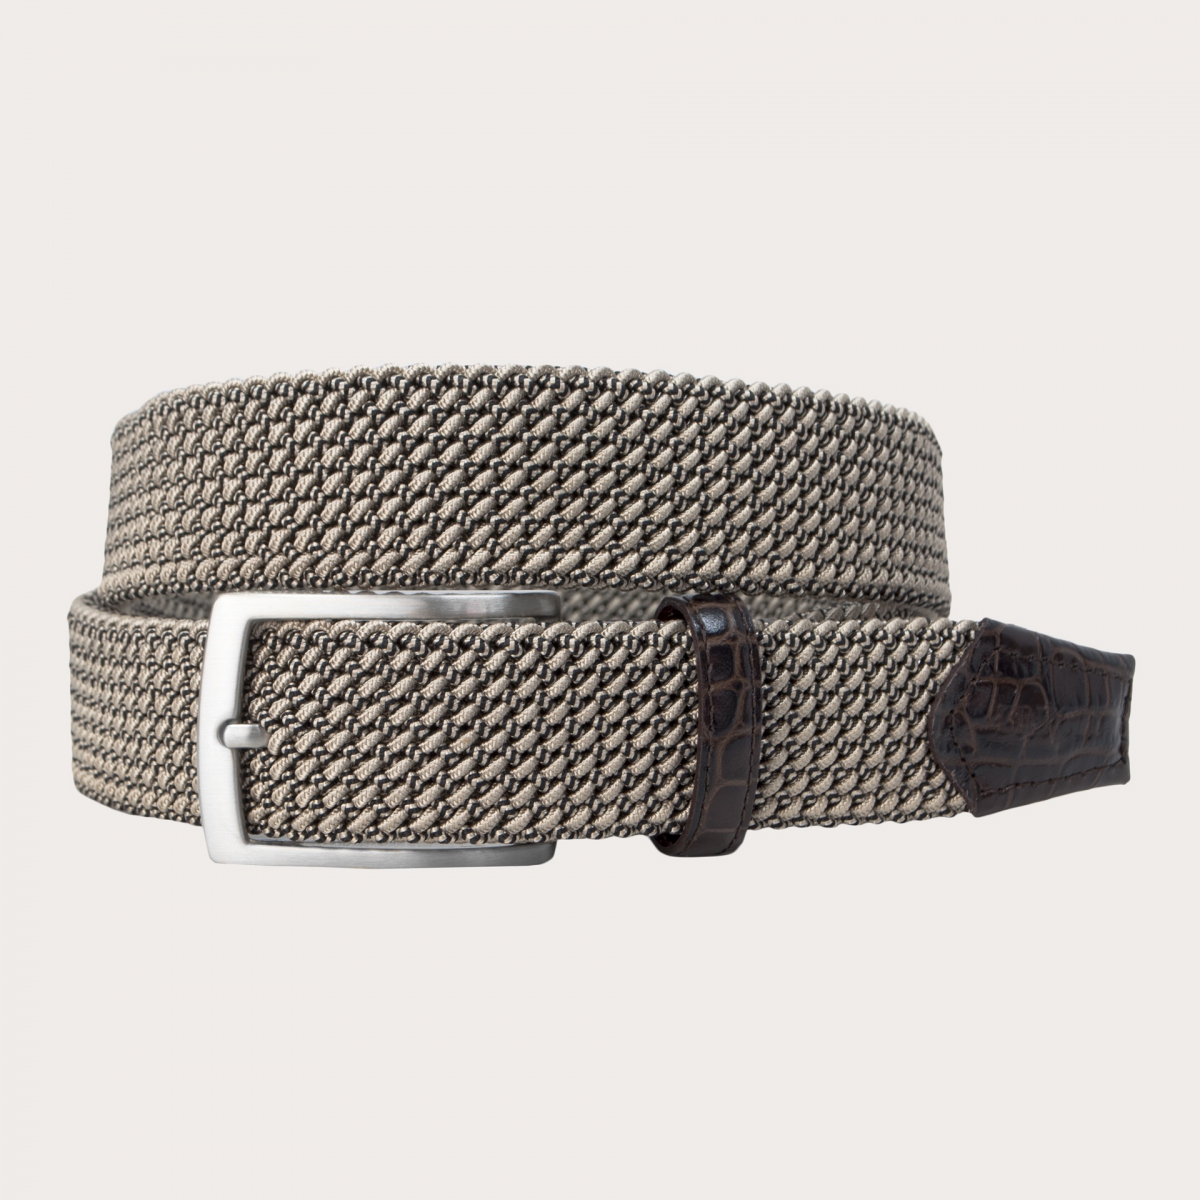 BRUCLE Braided elastic stretch tubular belt, tan and brown, nickel free